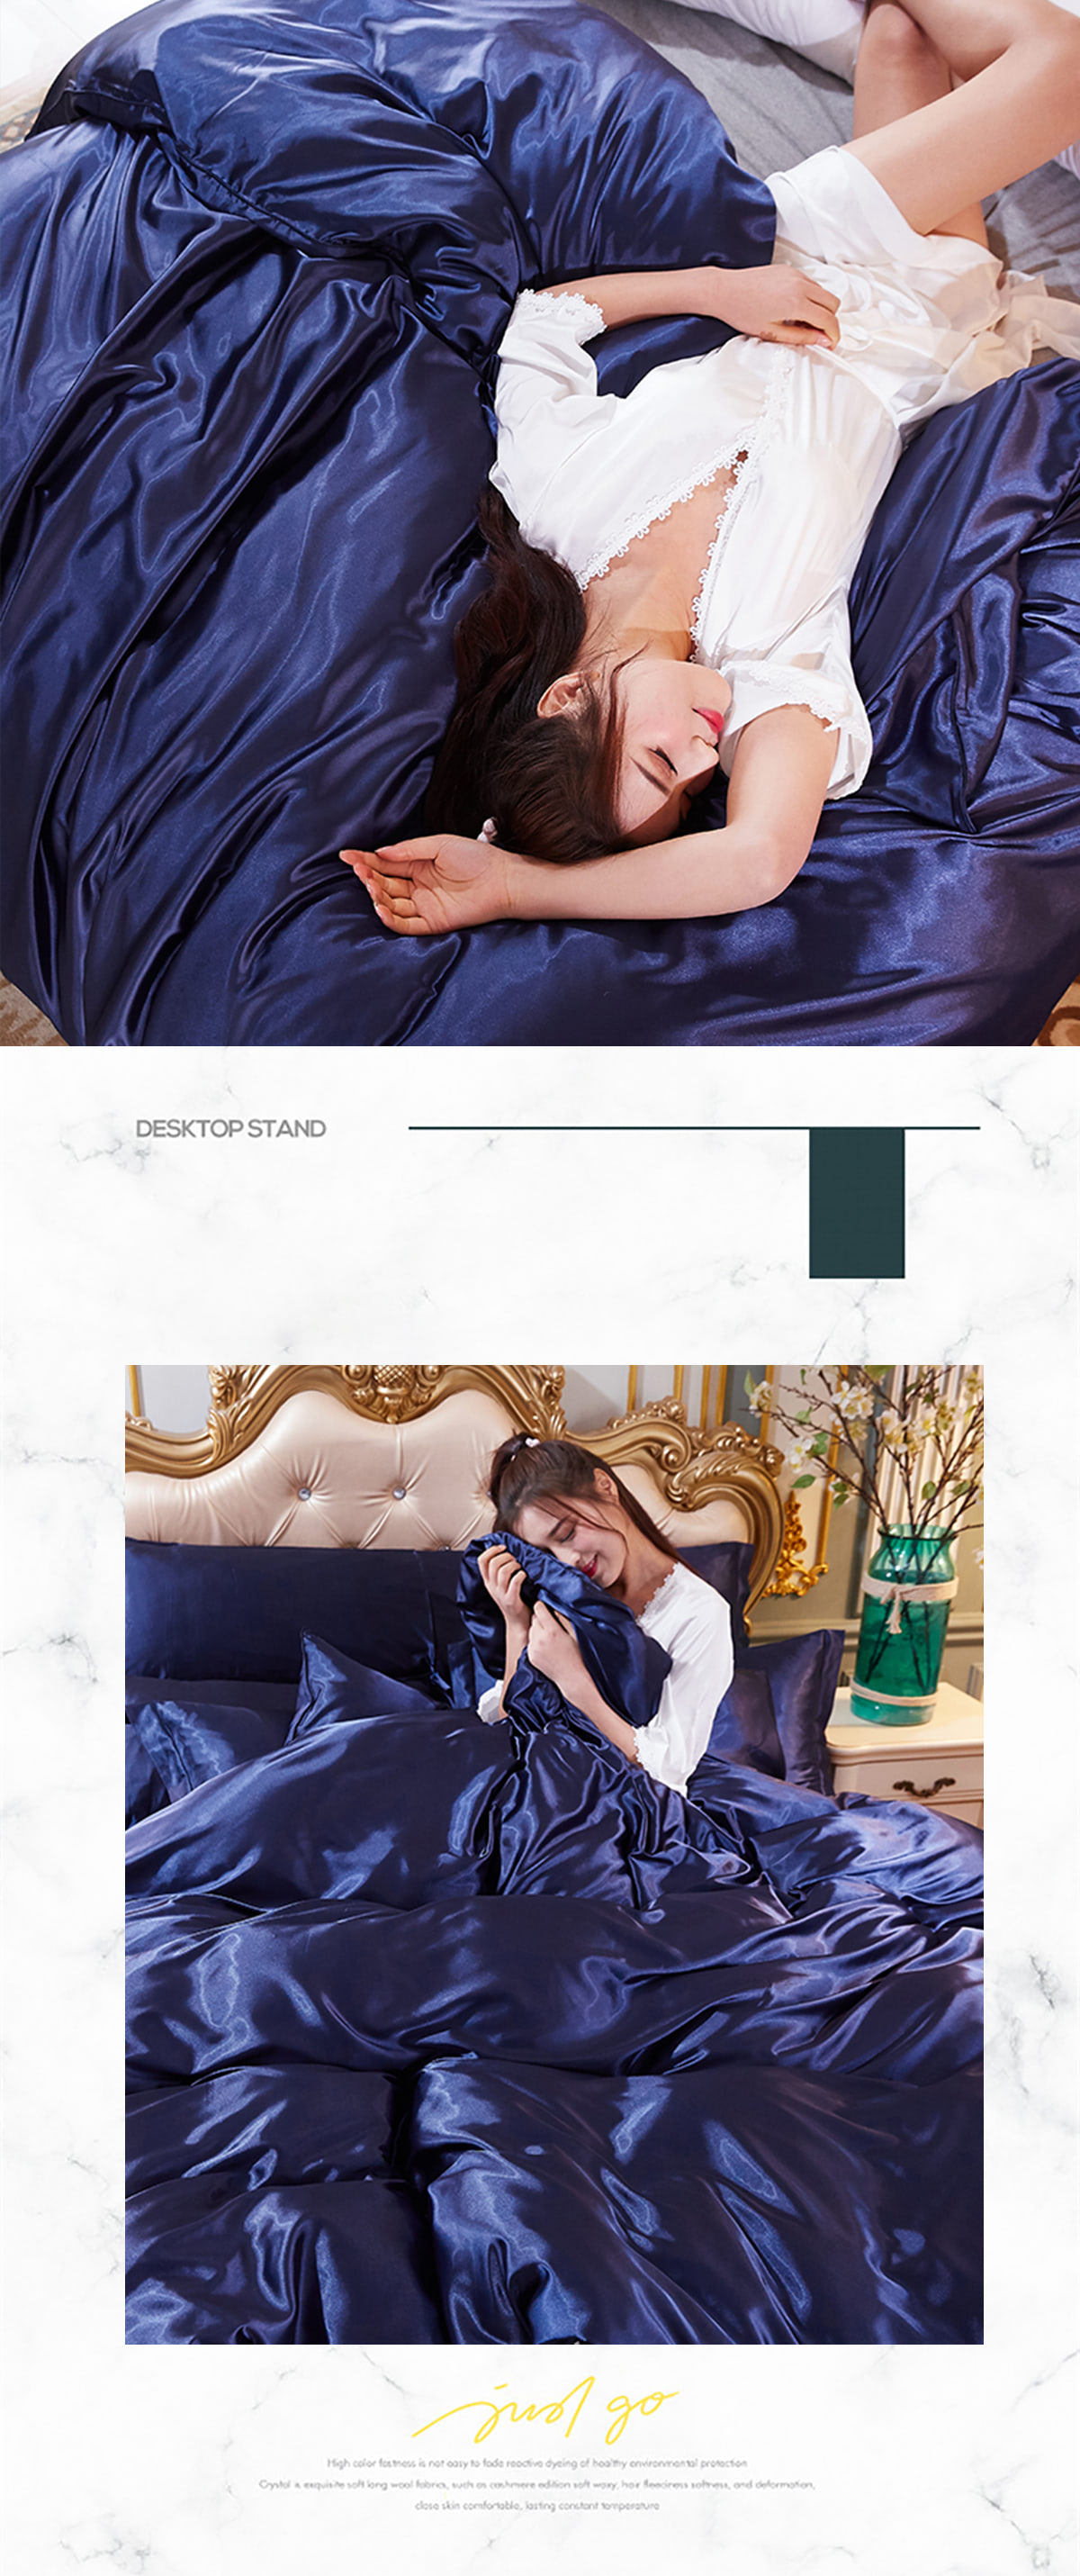 Silky-Satin-Bedding-Set-with-Duvet-Cover-Flat-Sheet-Pillowcases26.jpg